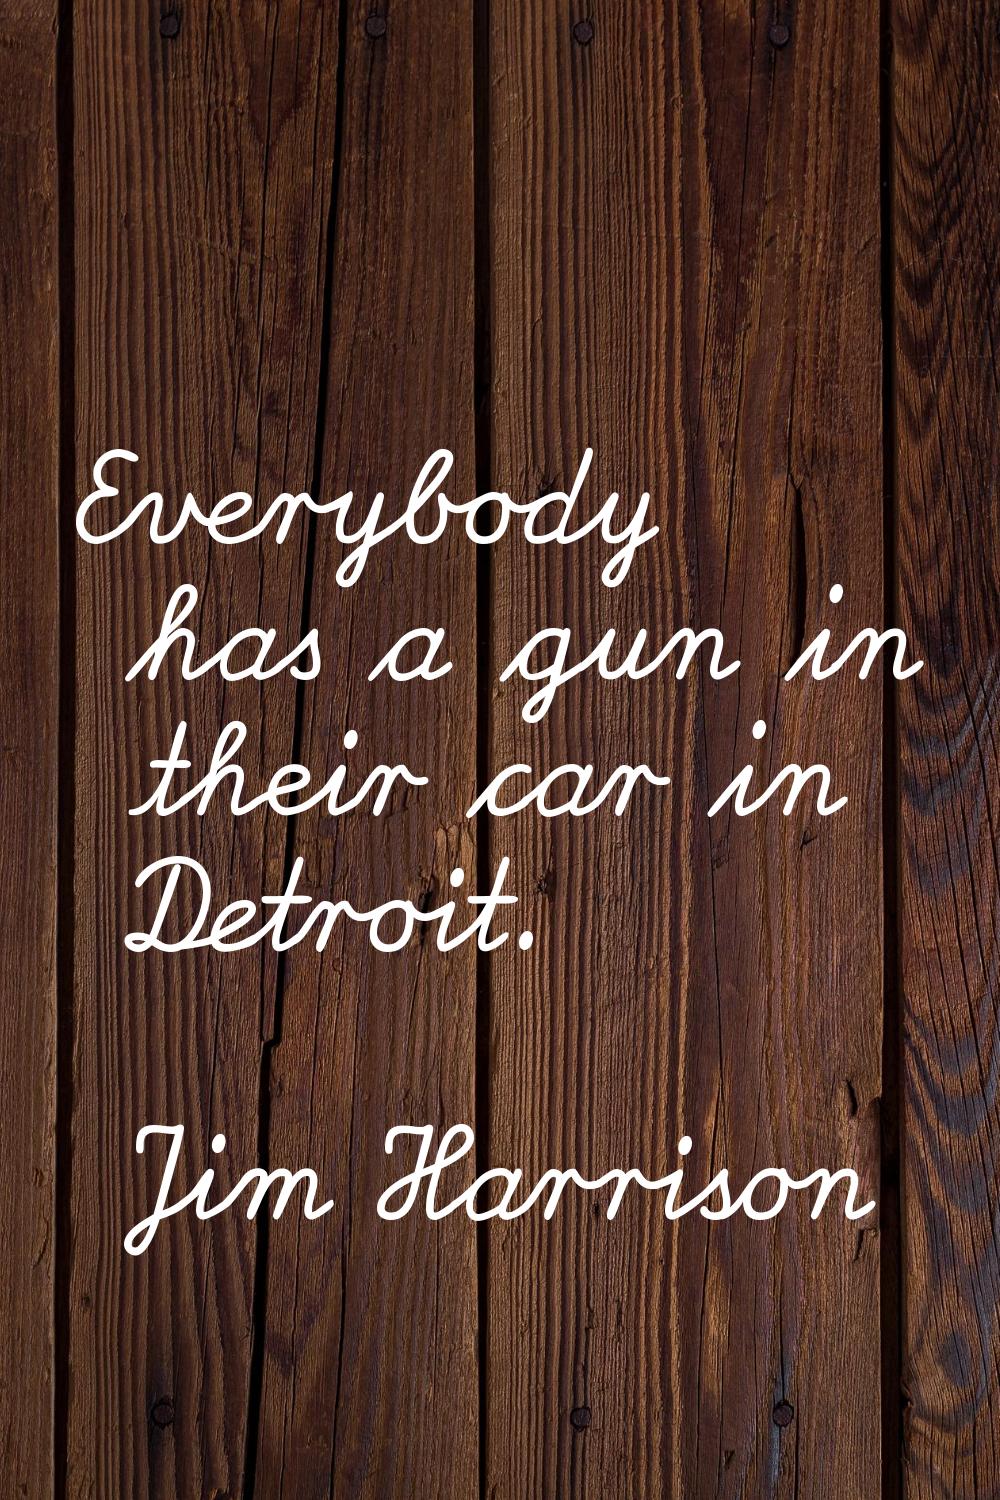 Everybody has a gun in their car in Detroit.